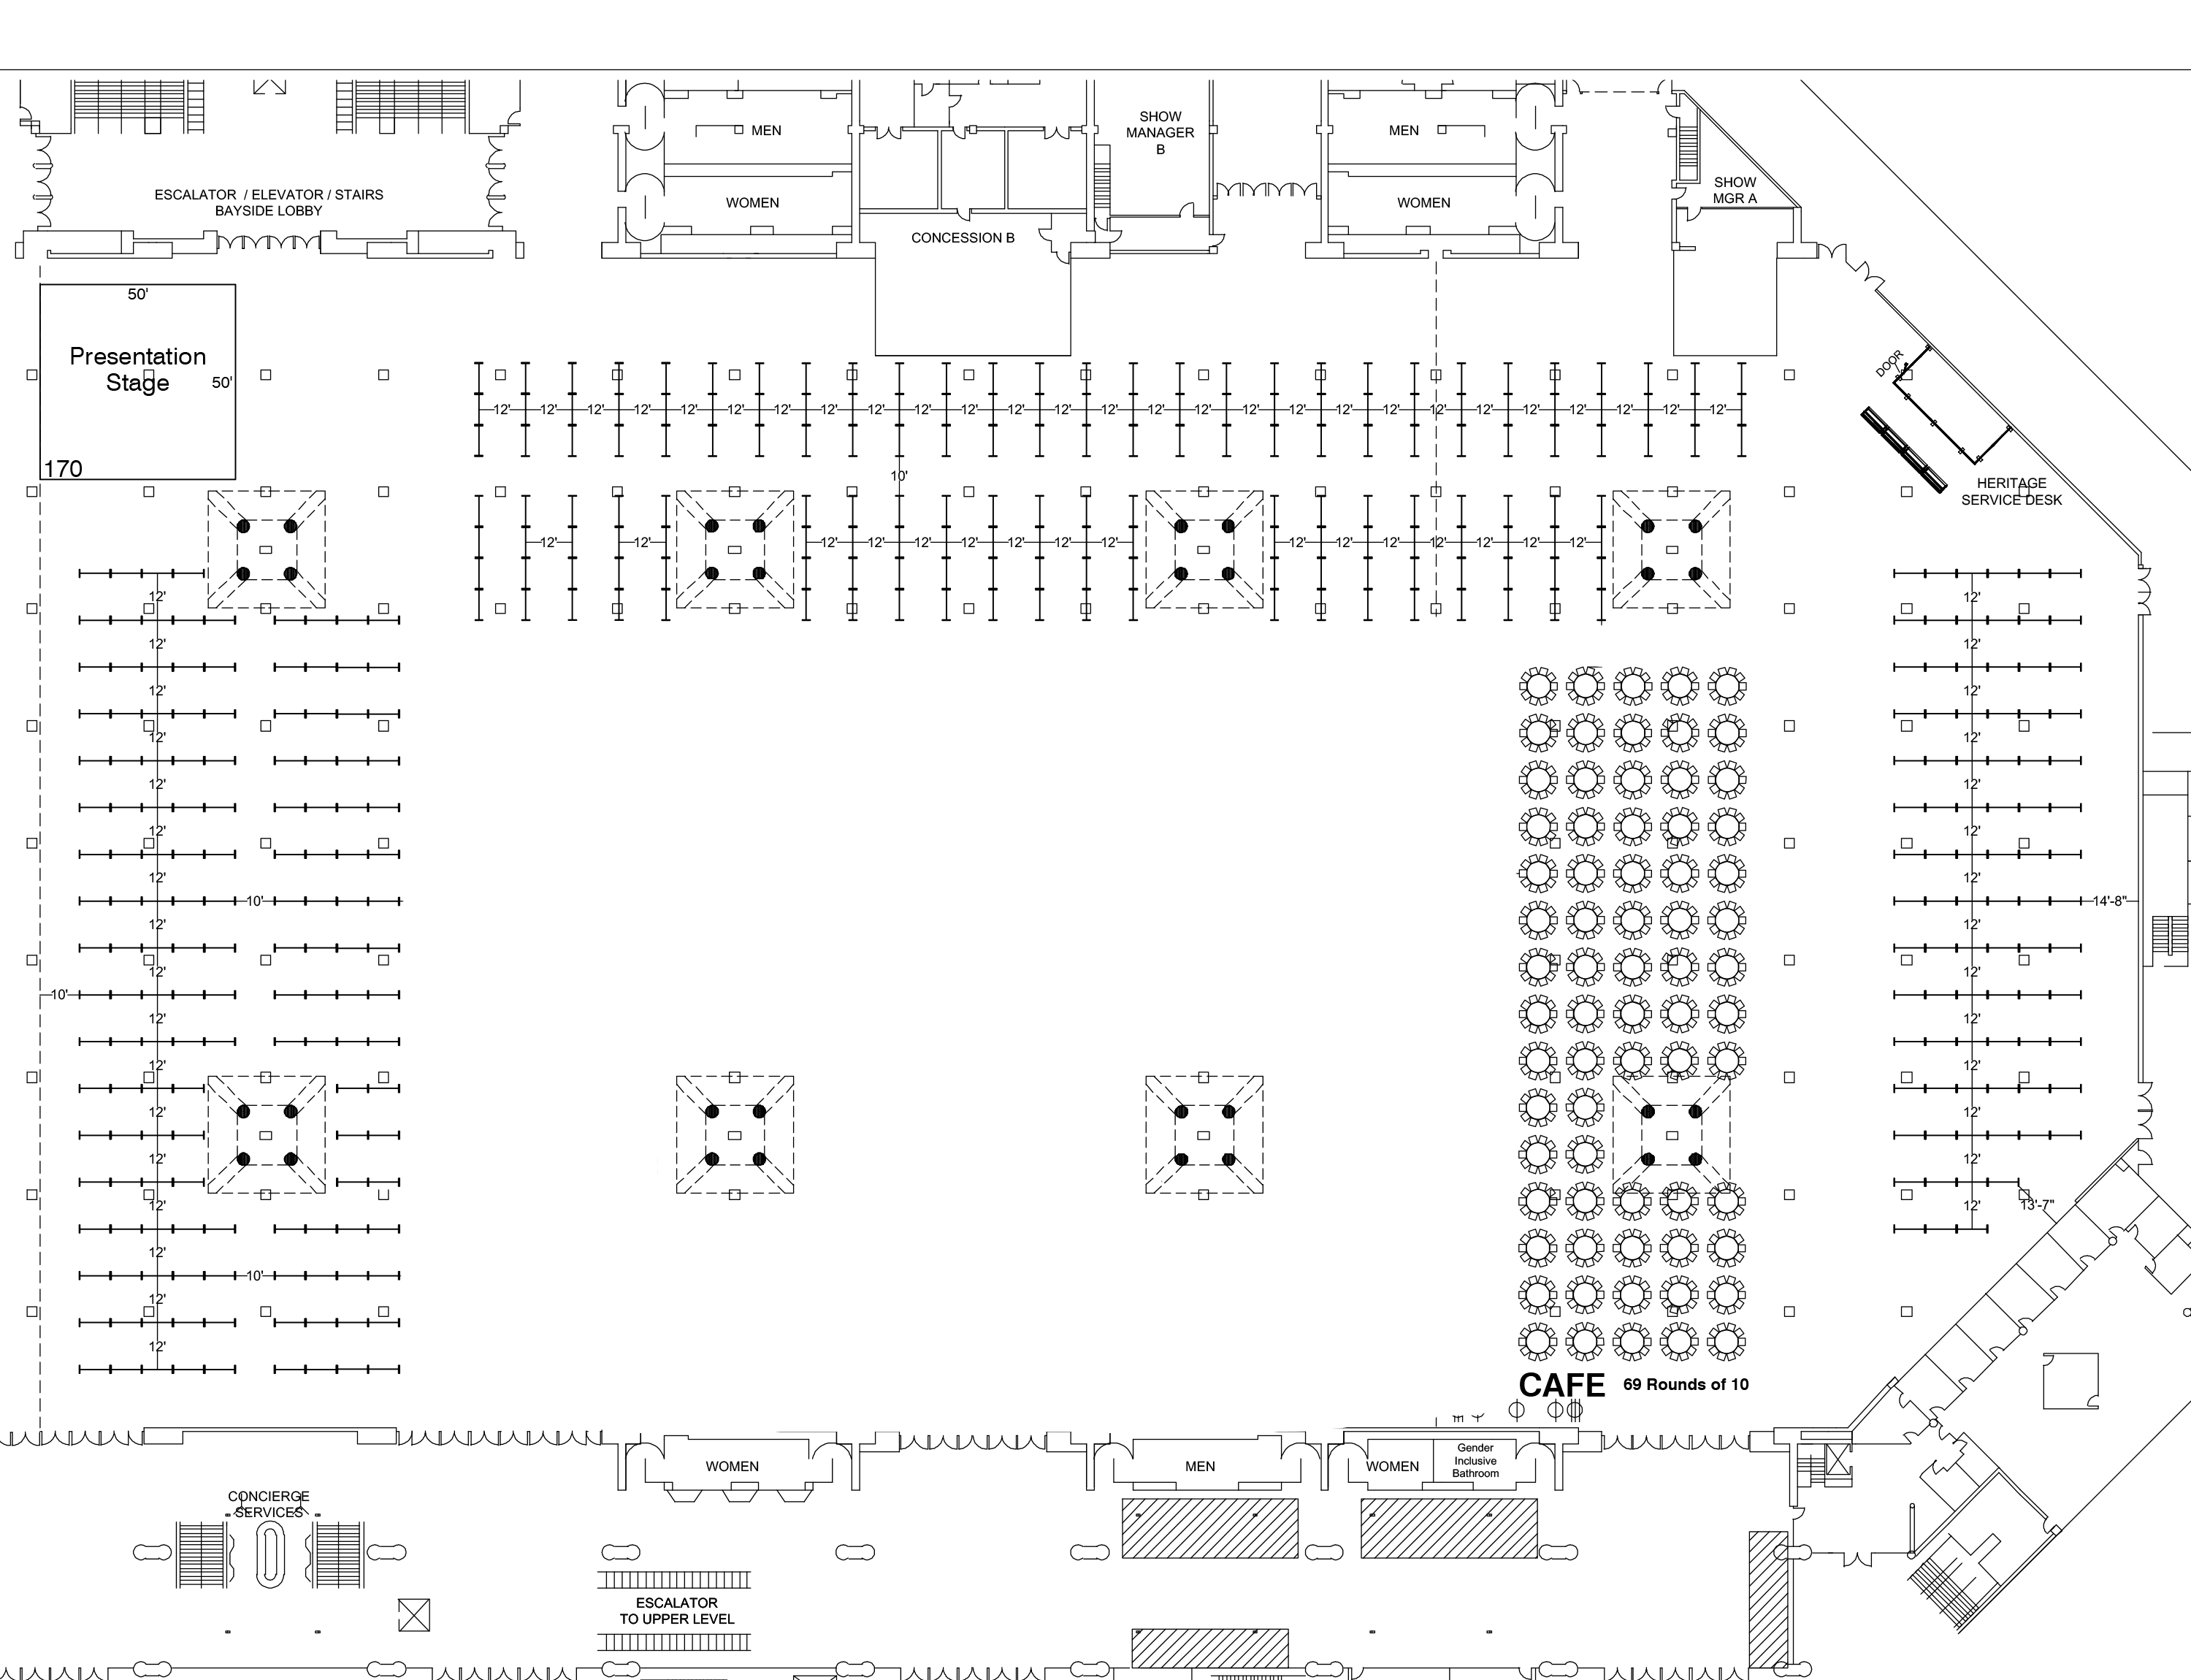 2023 SITC Annual Meeting Exhibitor Floor Plan